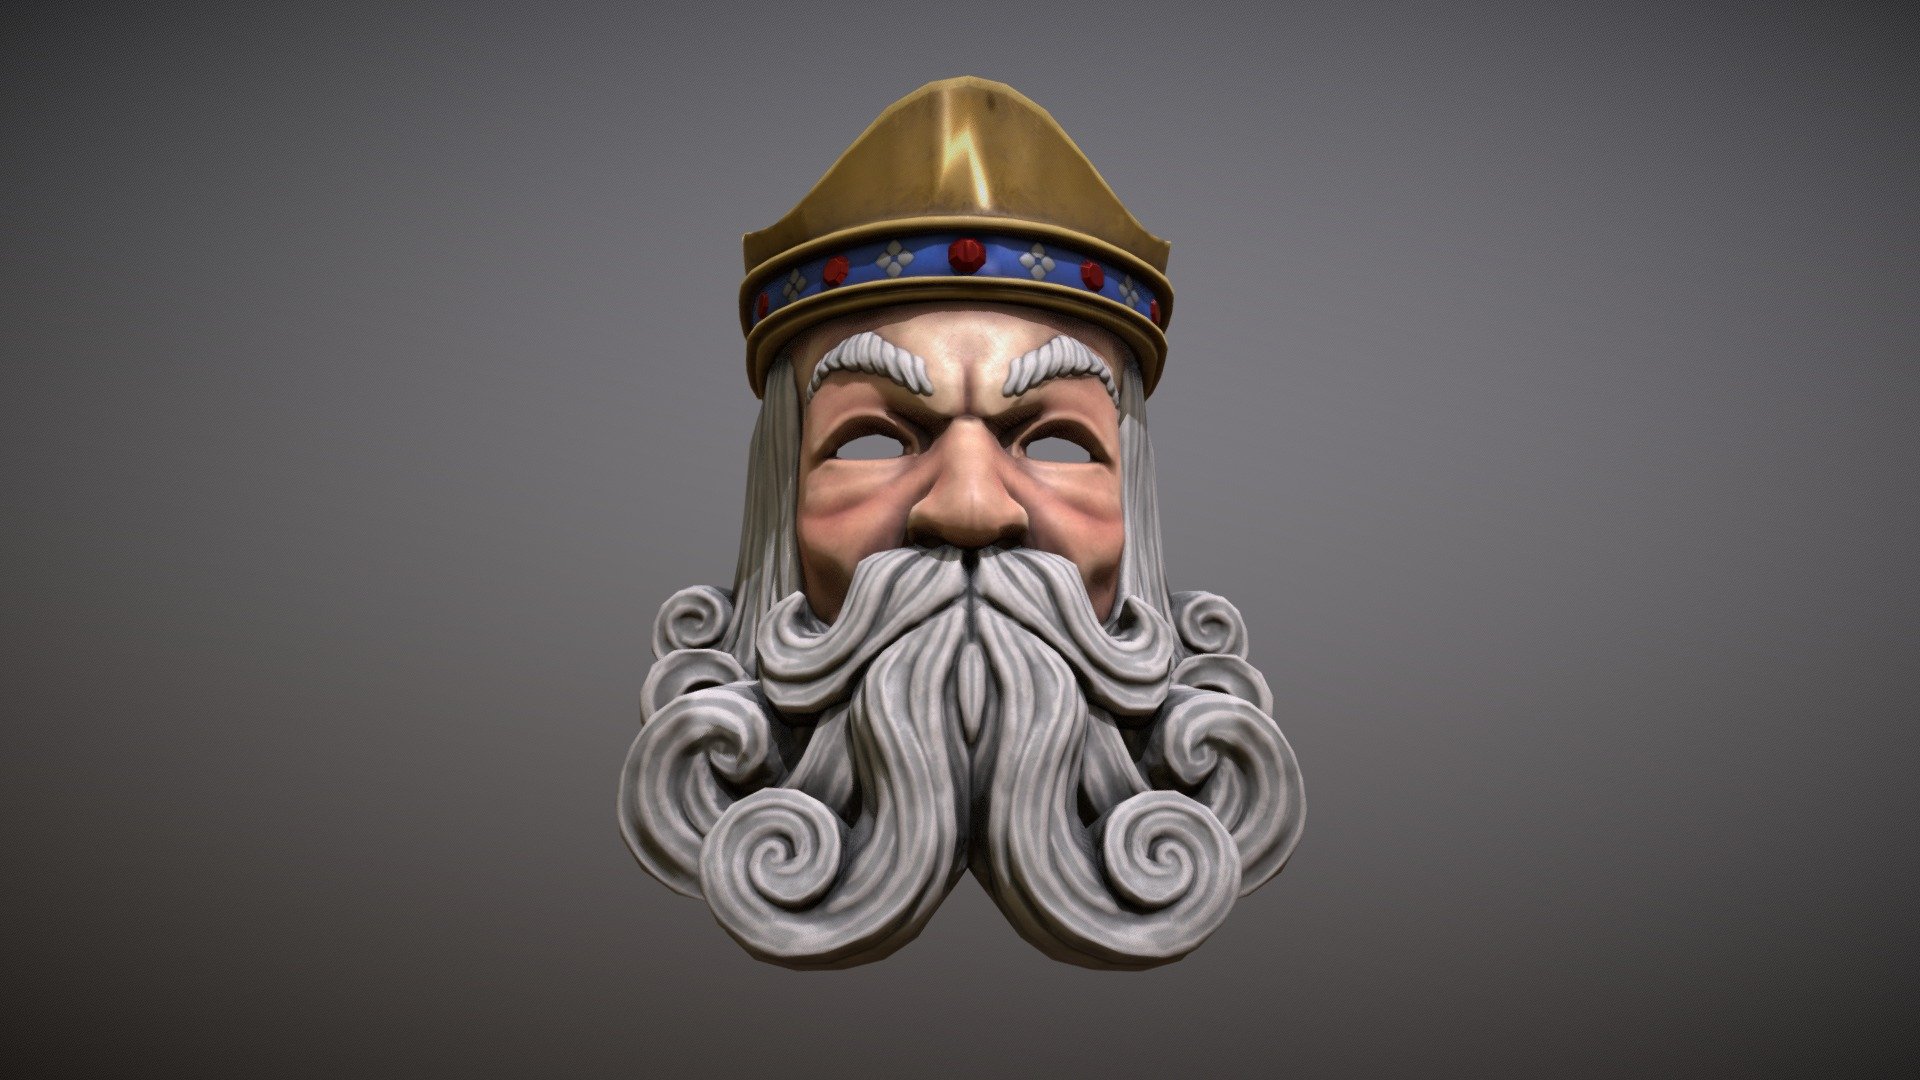 3d model for game - King's Mask - 3D model by Grigorii Ischenko (@grigoriyarx) 3d model